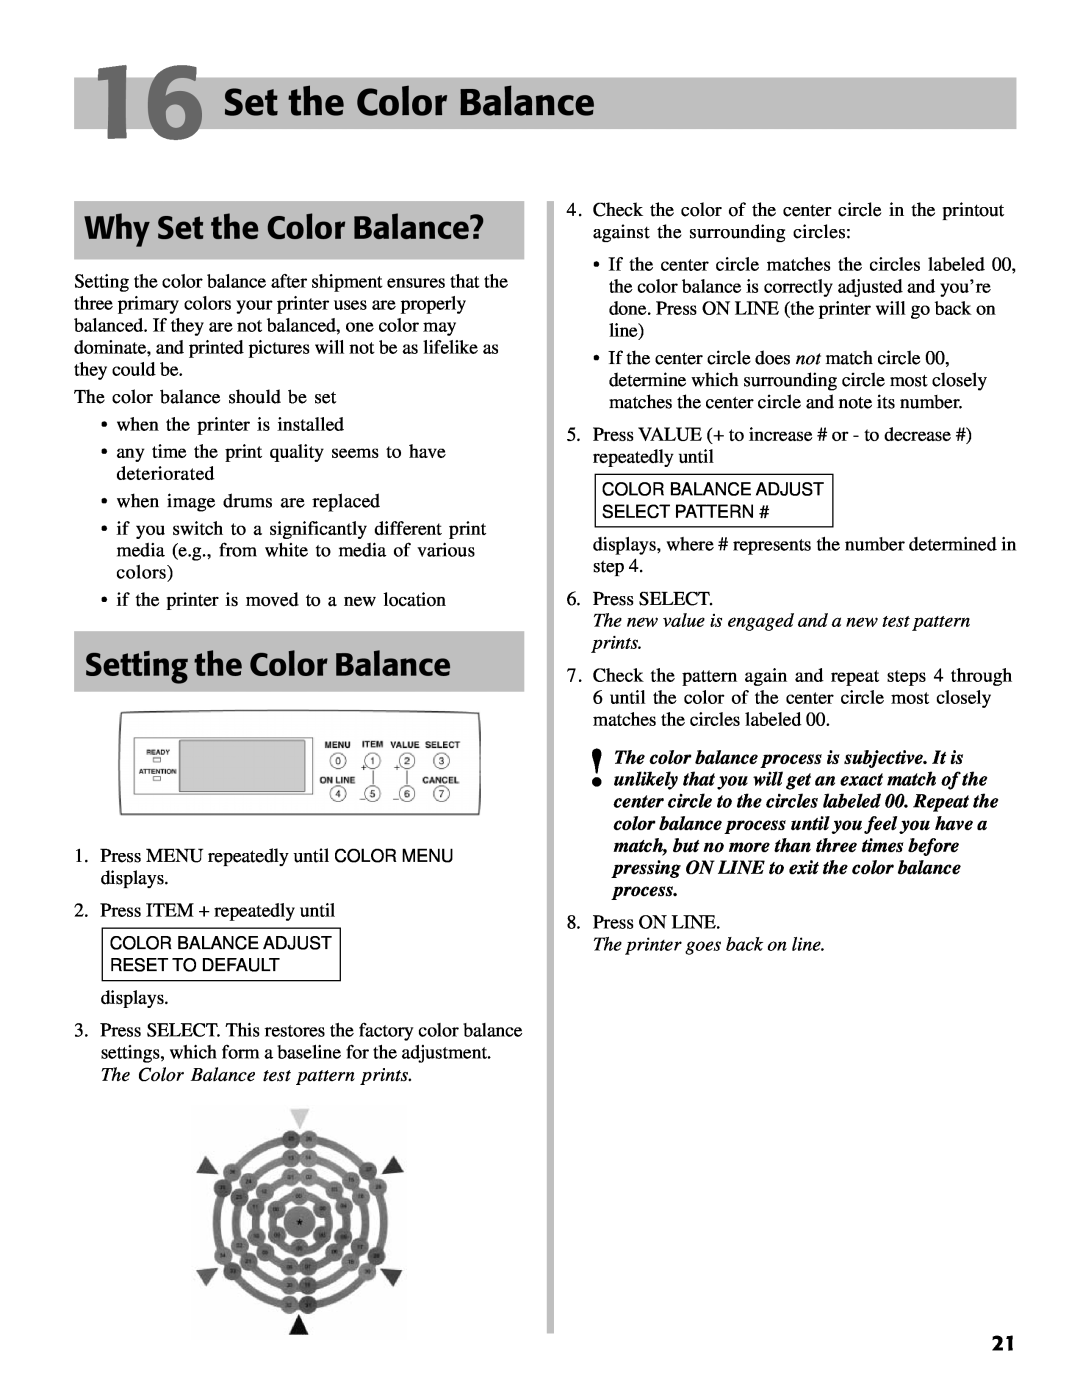 Oki C7000 setup guide Why Set the Color Balance?, Setting the Color Balance, The printer goes back on line 